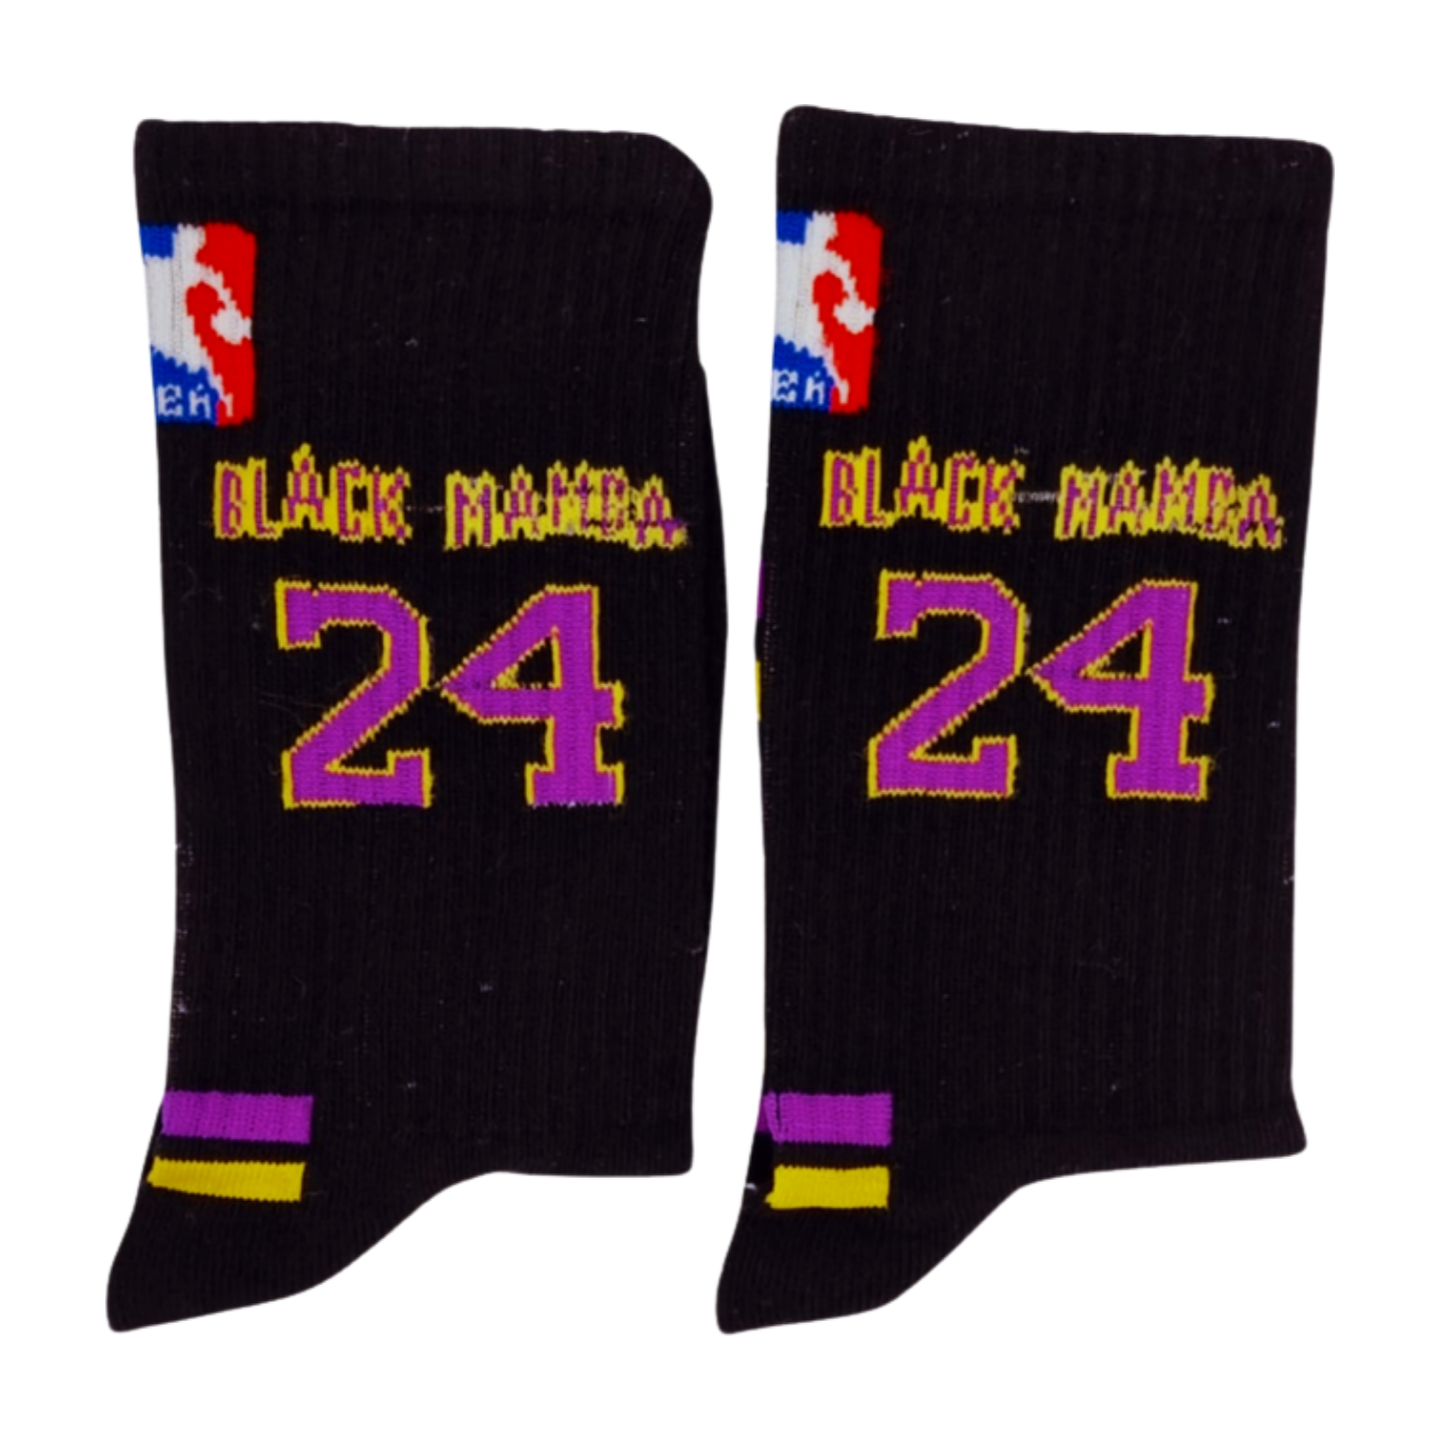 Black Mamba Basketball Socks with Kobe Bryant's number